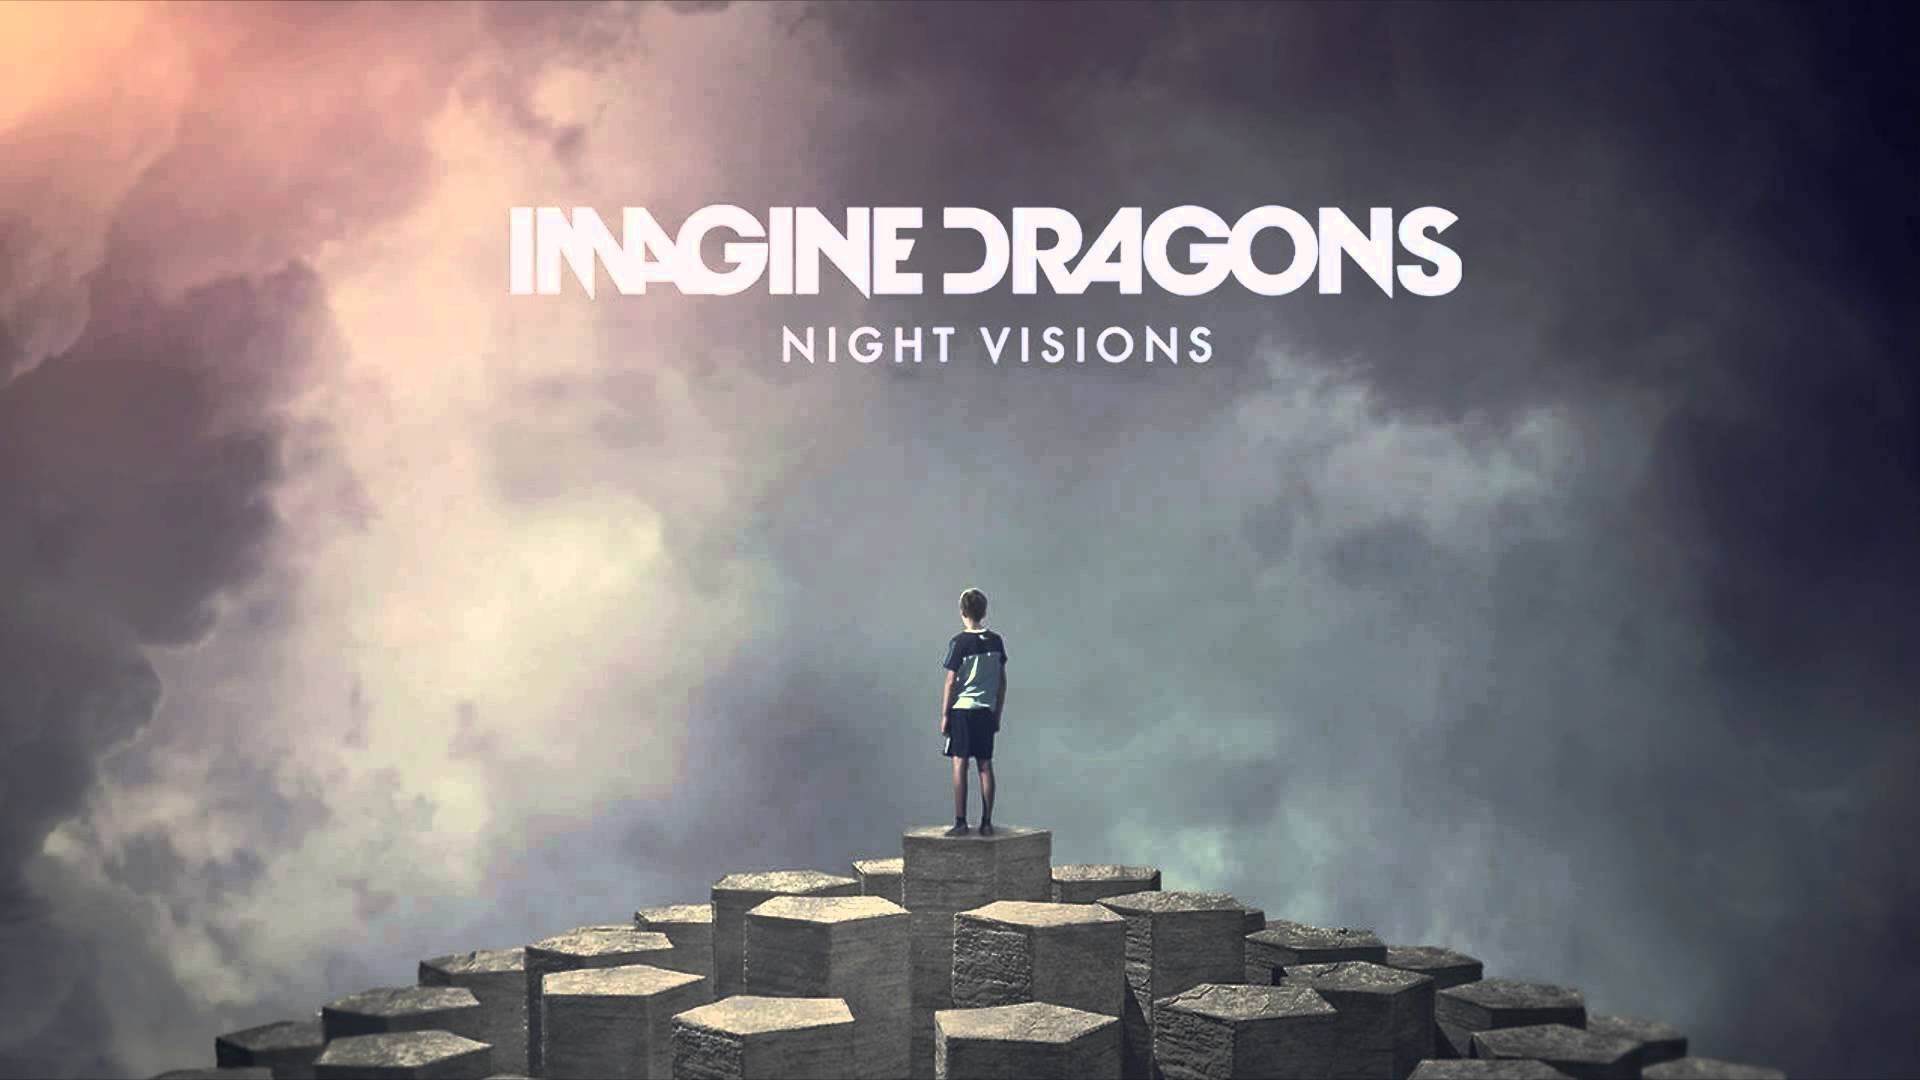 Imagine night. Imagine Dragons альбом Night Visions. Радиоактив imagine Dragons. Imagine Dragons Radioactive обложка. Imagine Dragons Night Visions обложка.